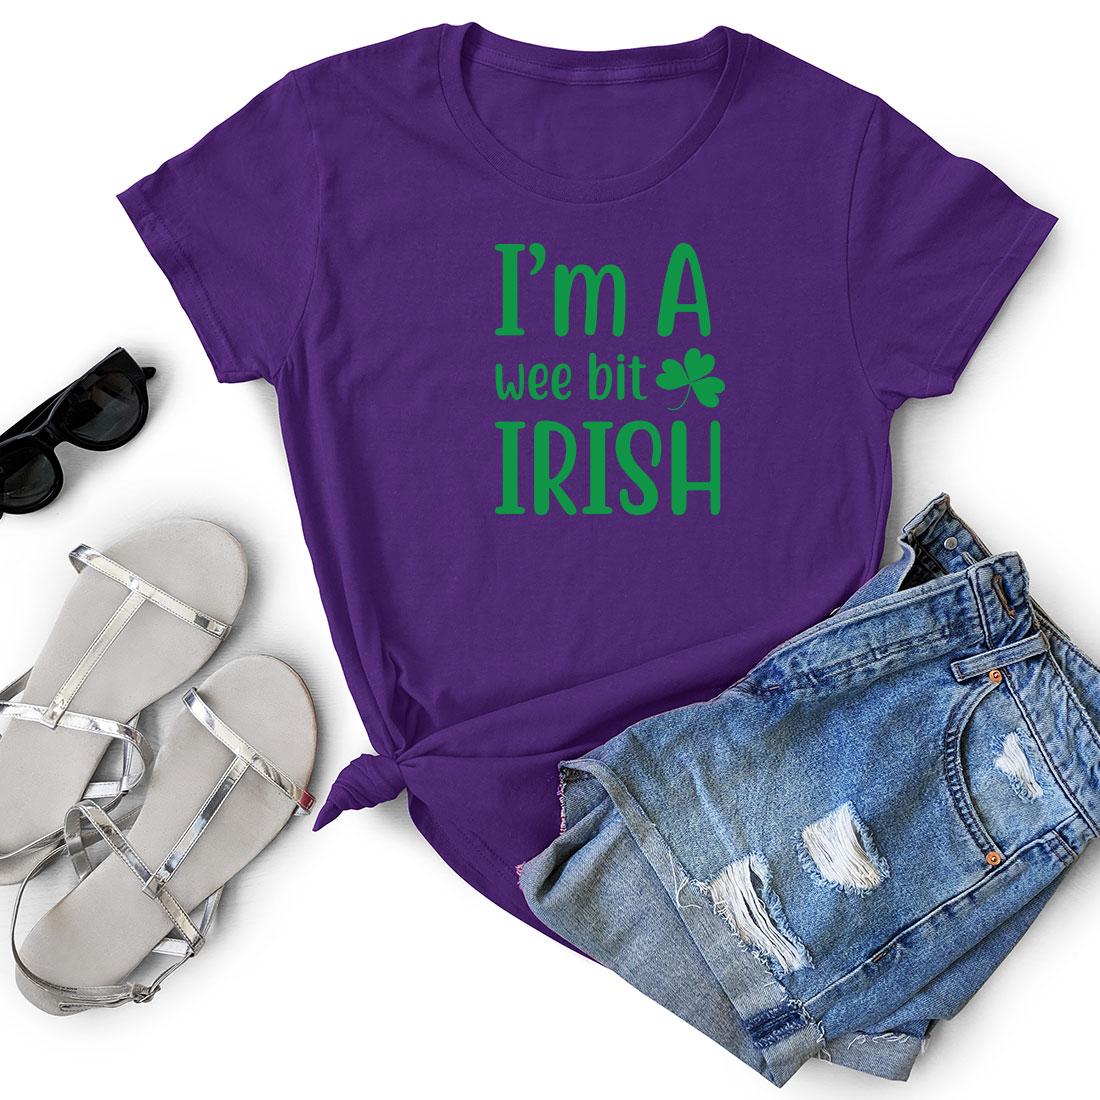 T - shirt that says i'm a weet bit irish next to.